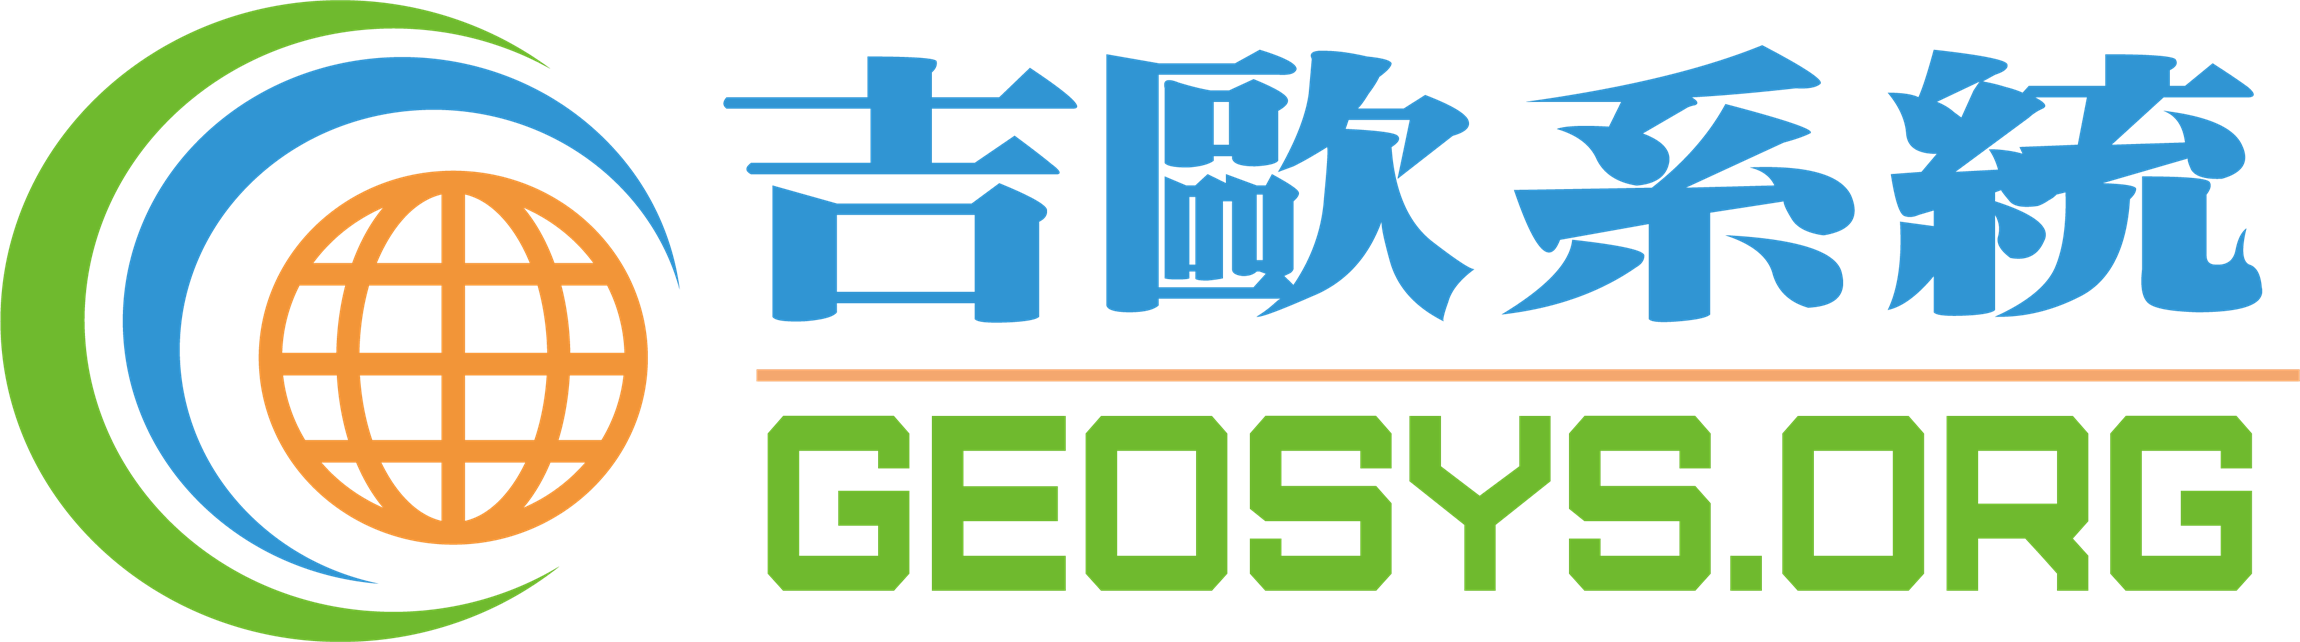 Public Photos / Files - GeoSys Logo